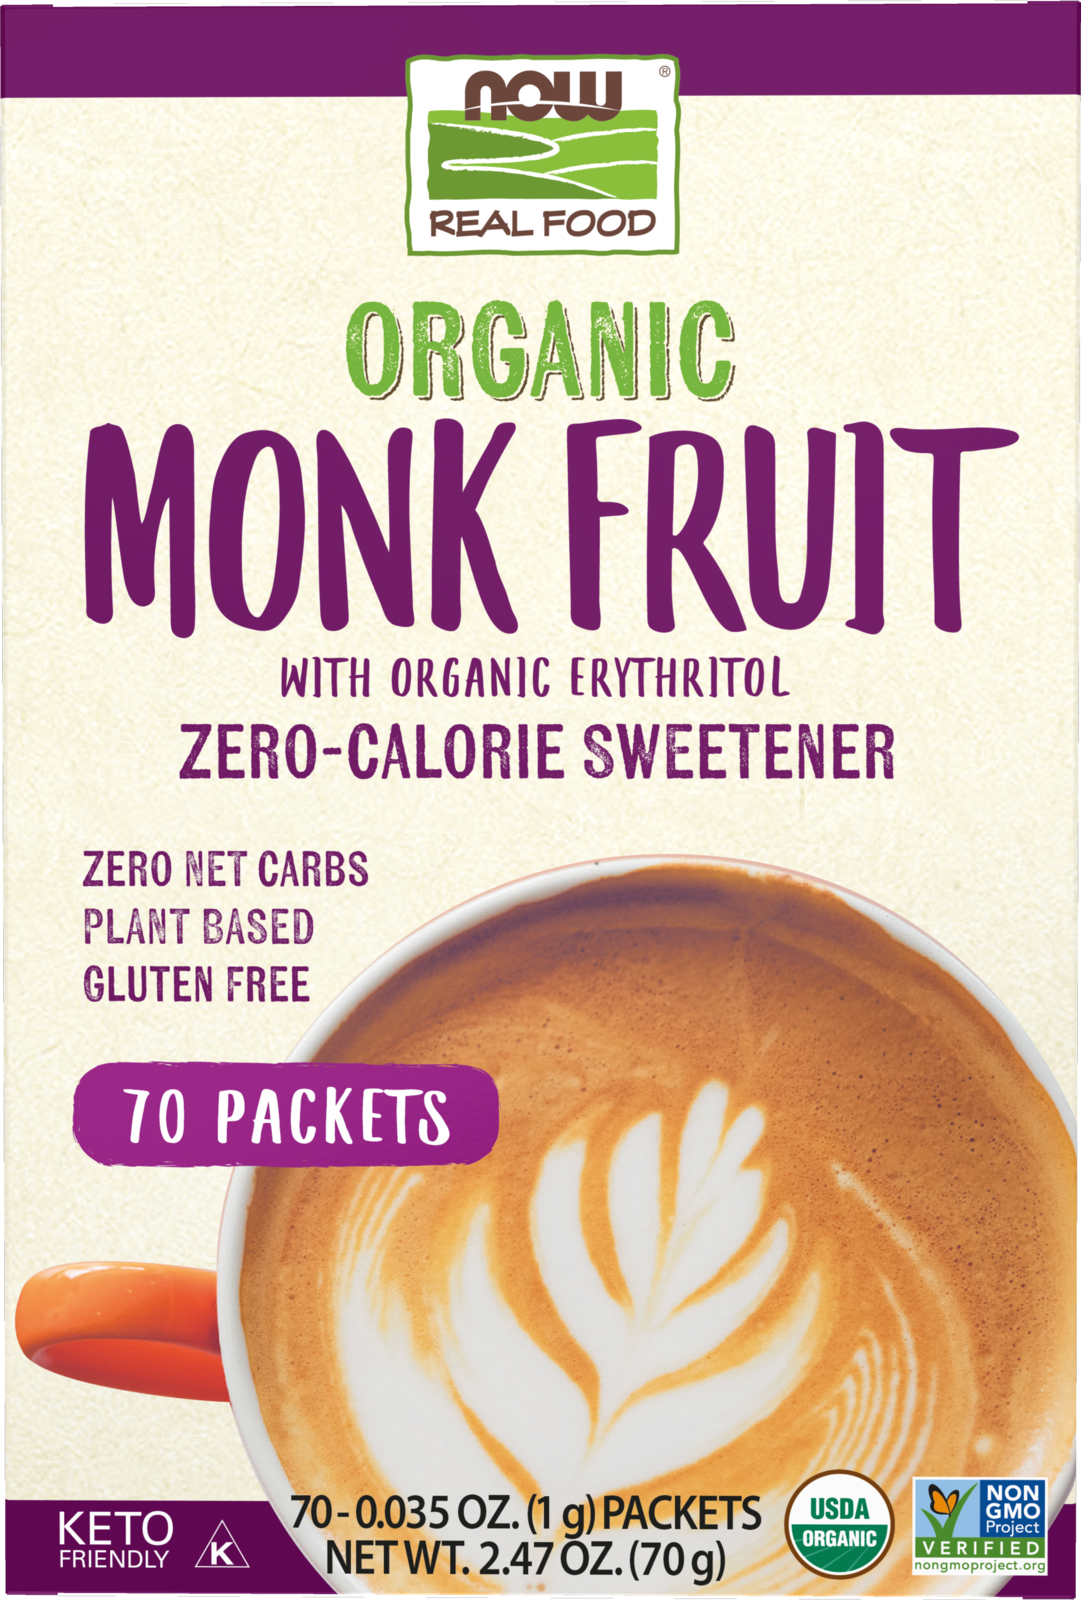 Monk Fruit Extract Powder Sweetener - Organic – Lean Healthy Ageless